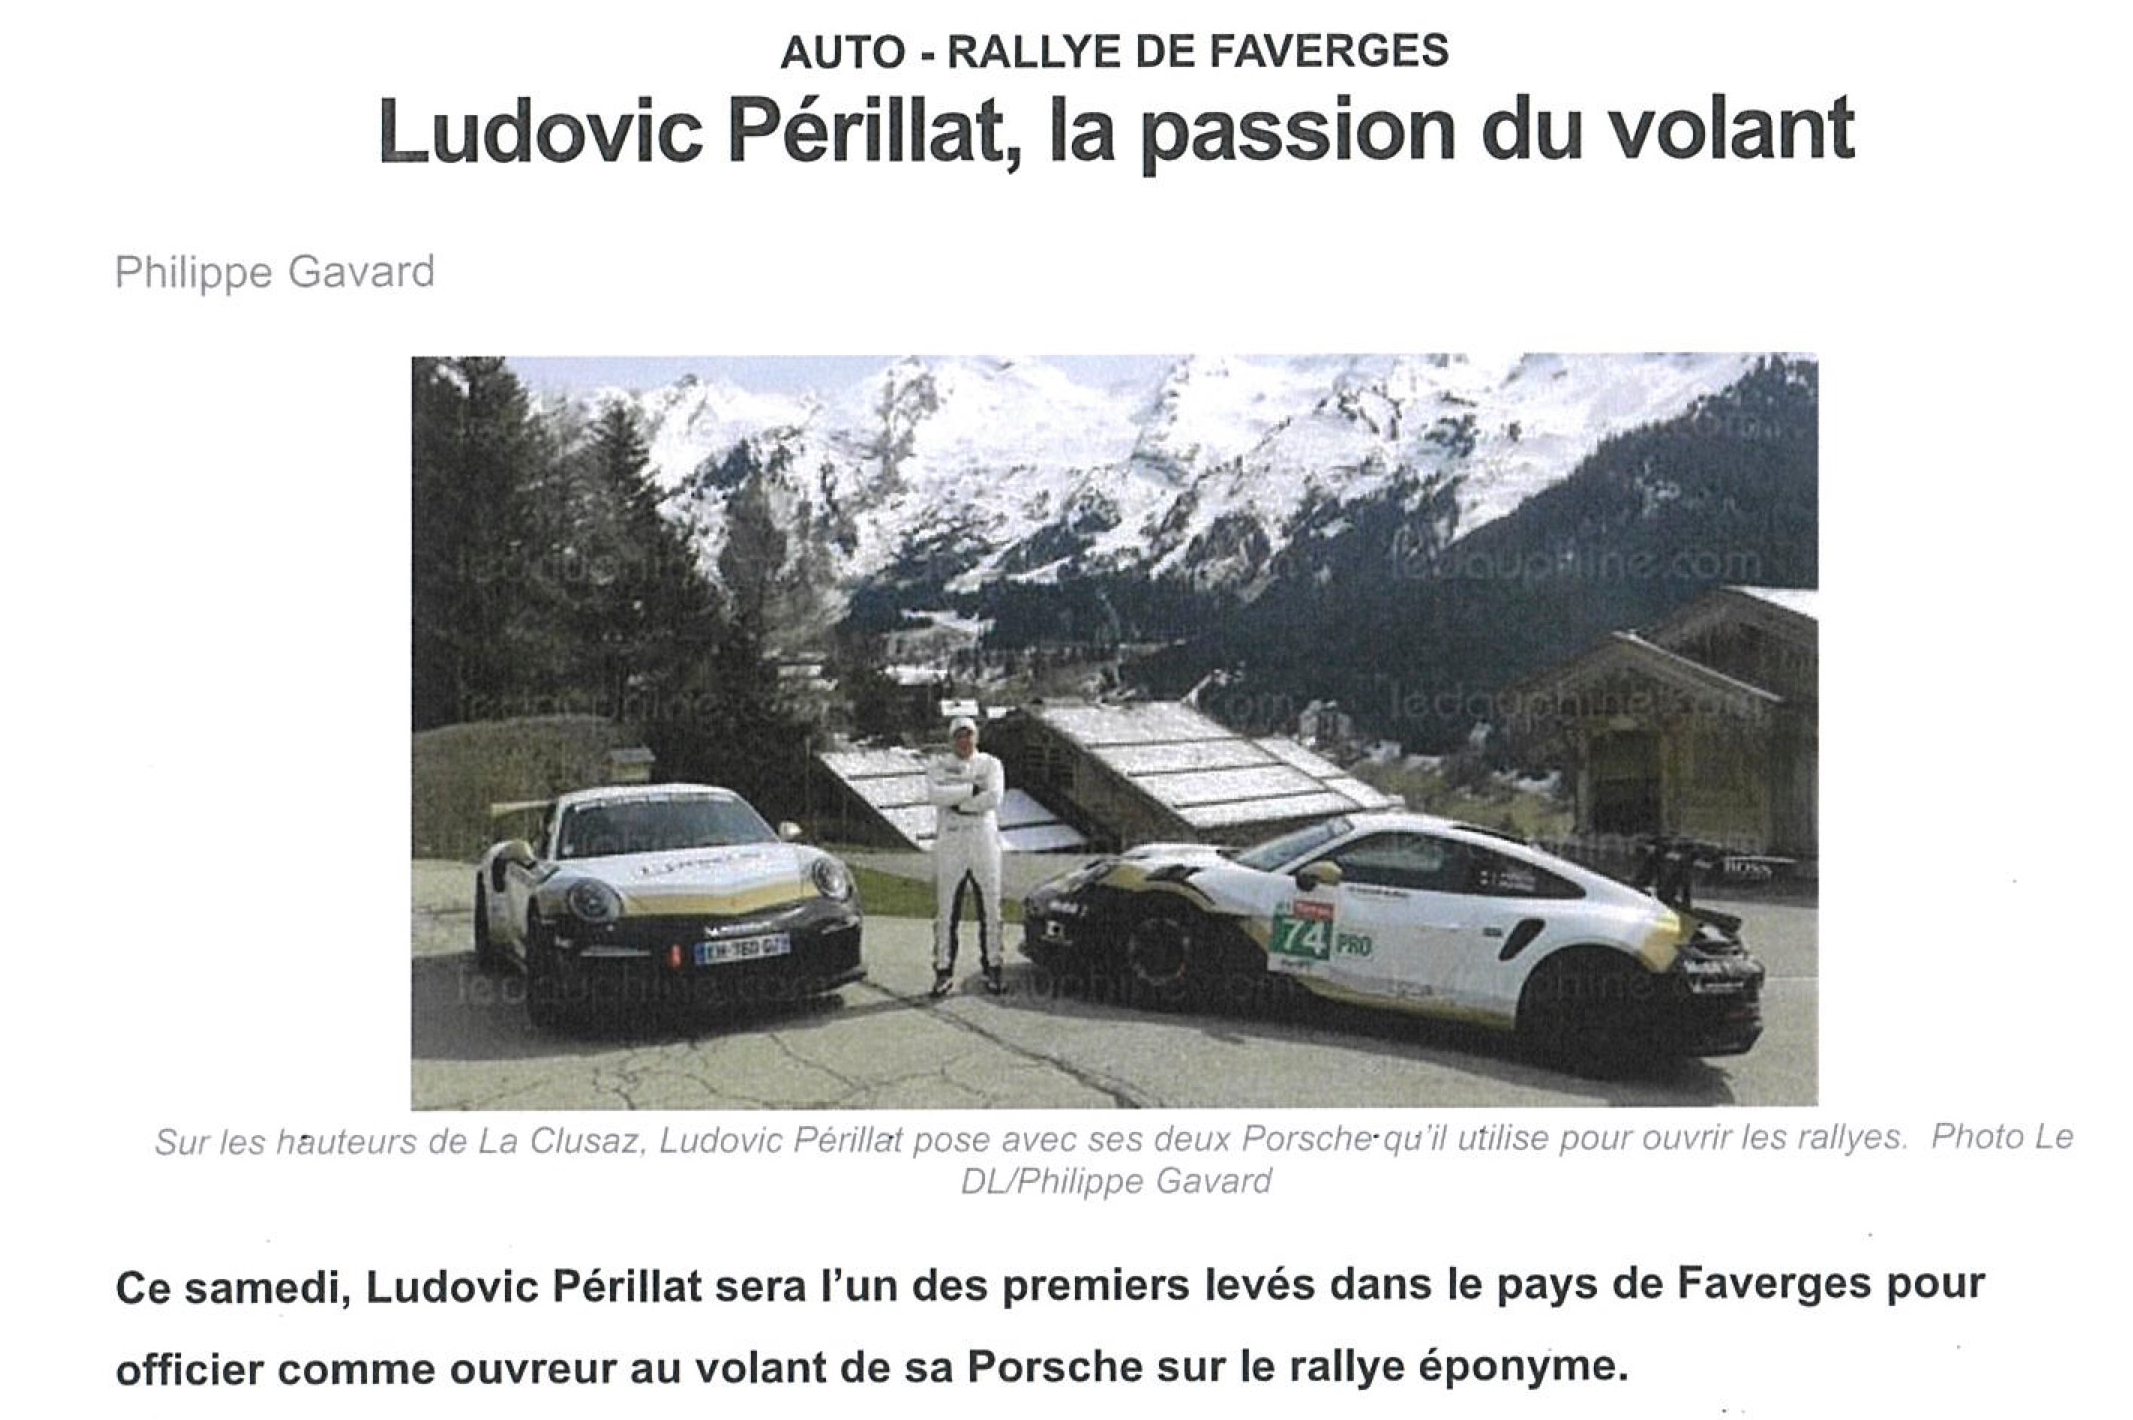 Ludovic Périllat, la passion du volant